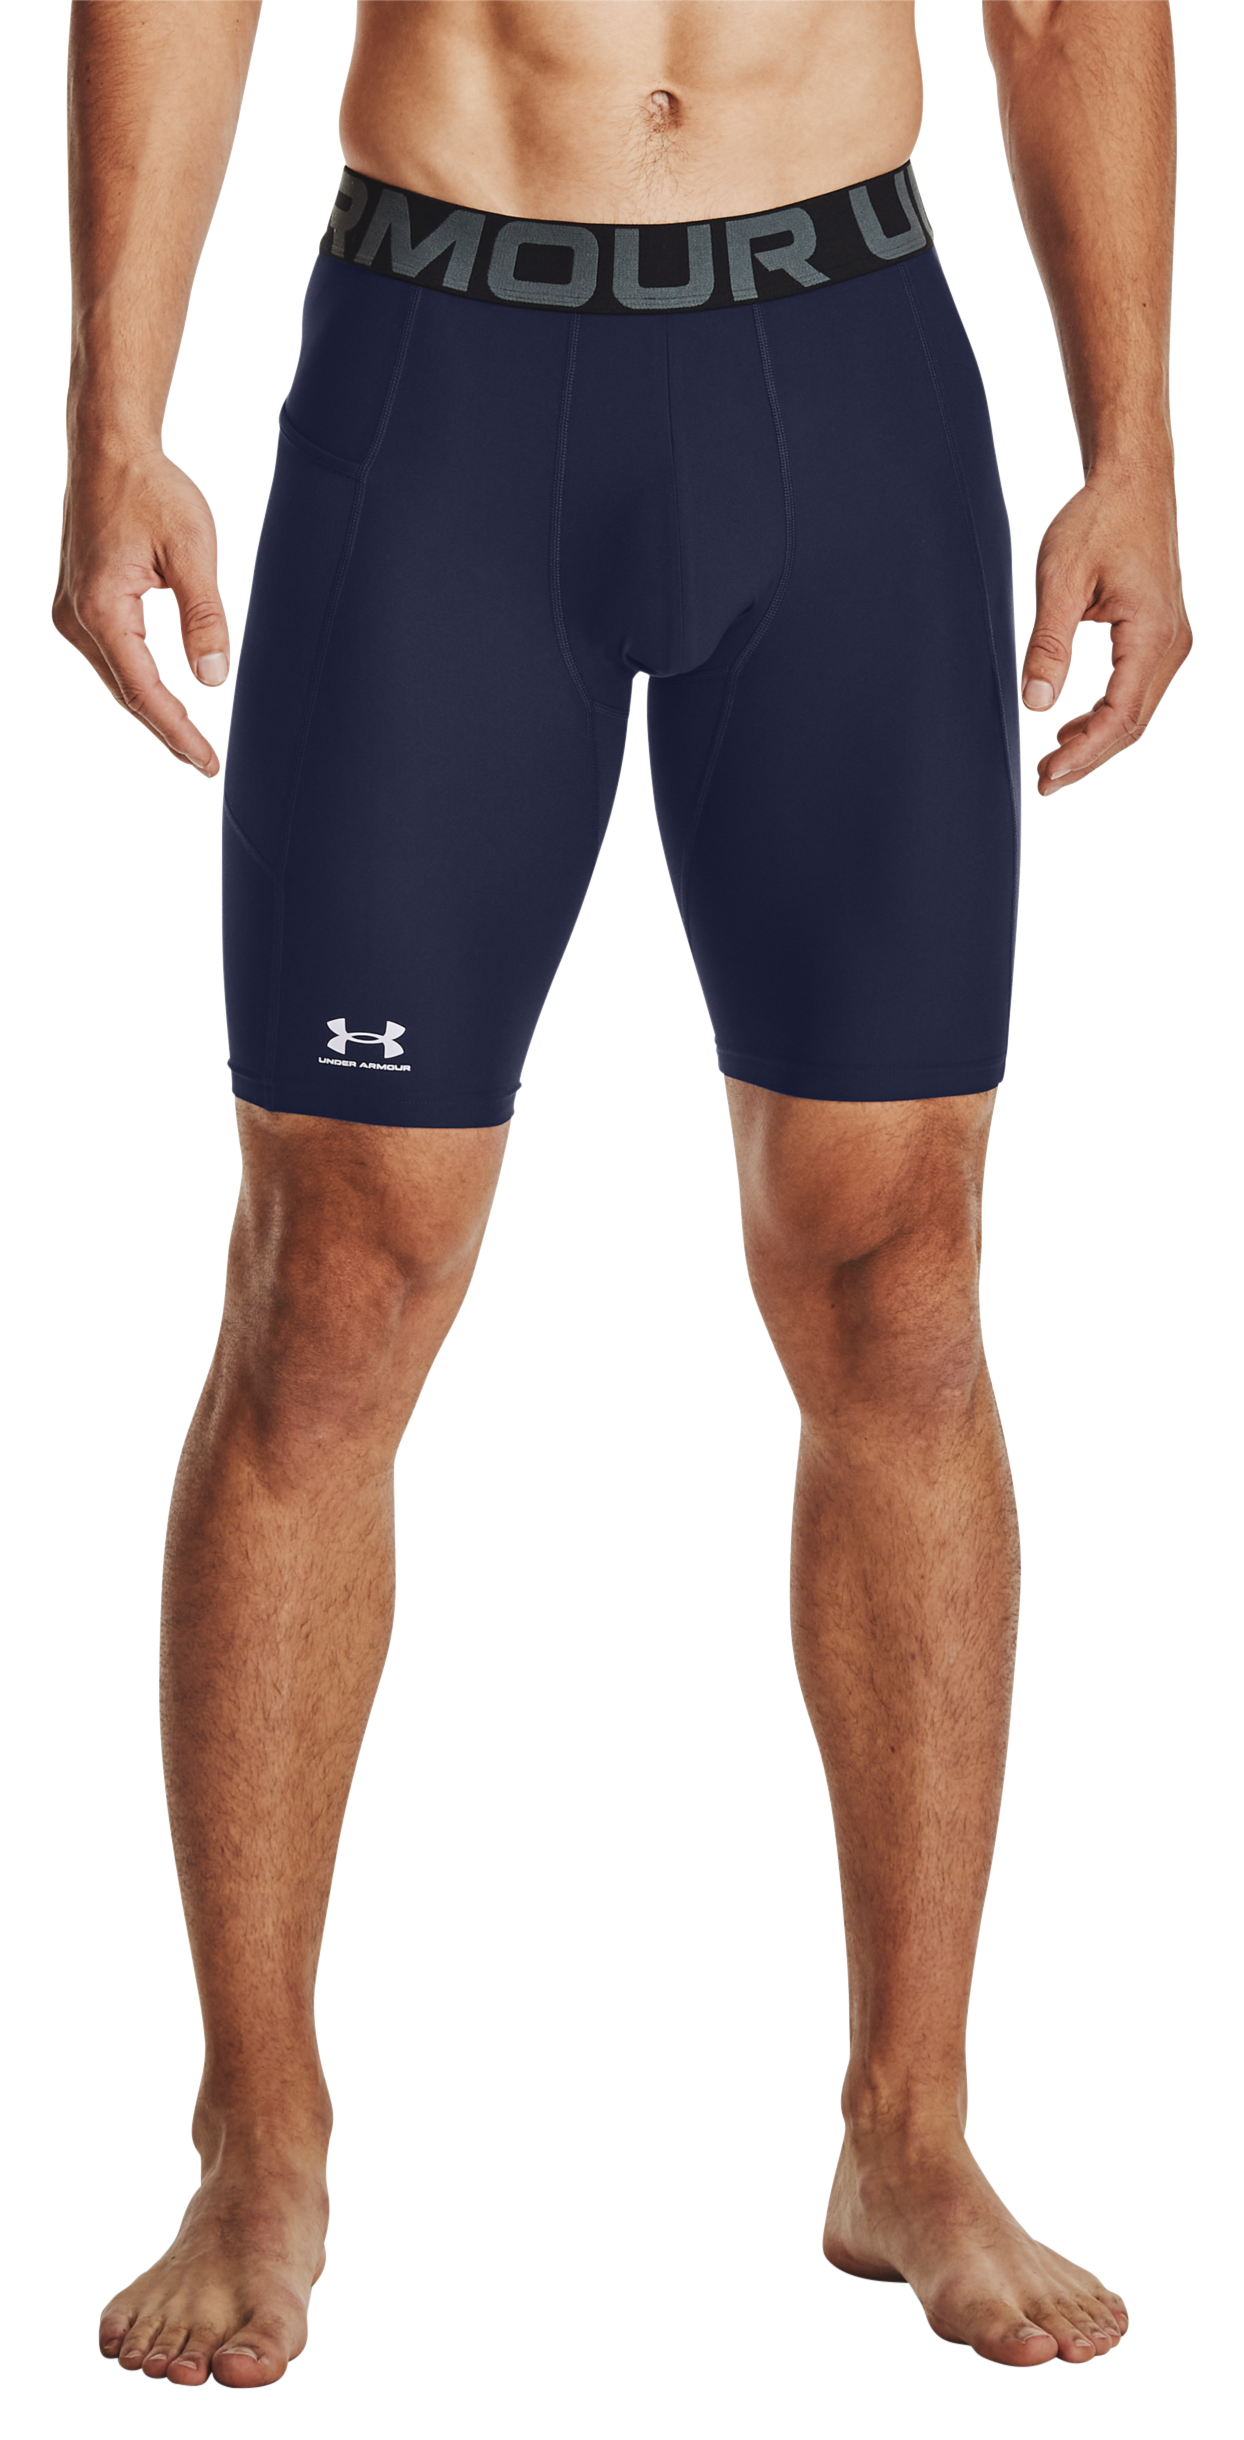 Under Armour HeatGear Pocket Long Shorts for Men - Midnight Navy/White - 3XLT